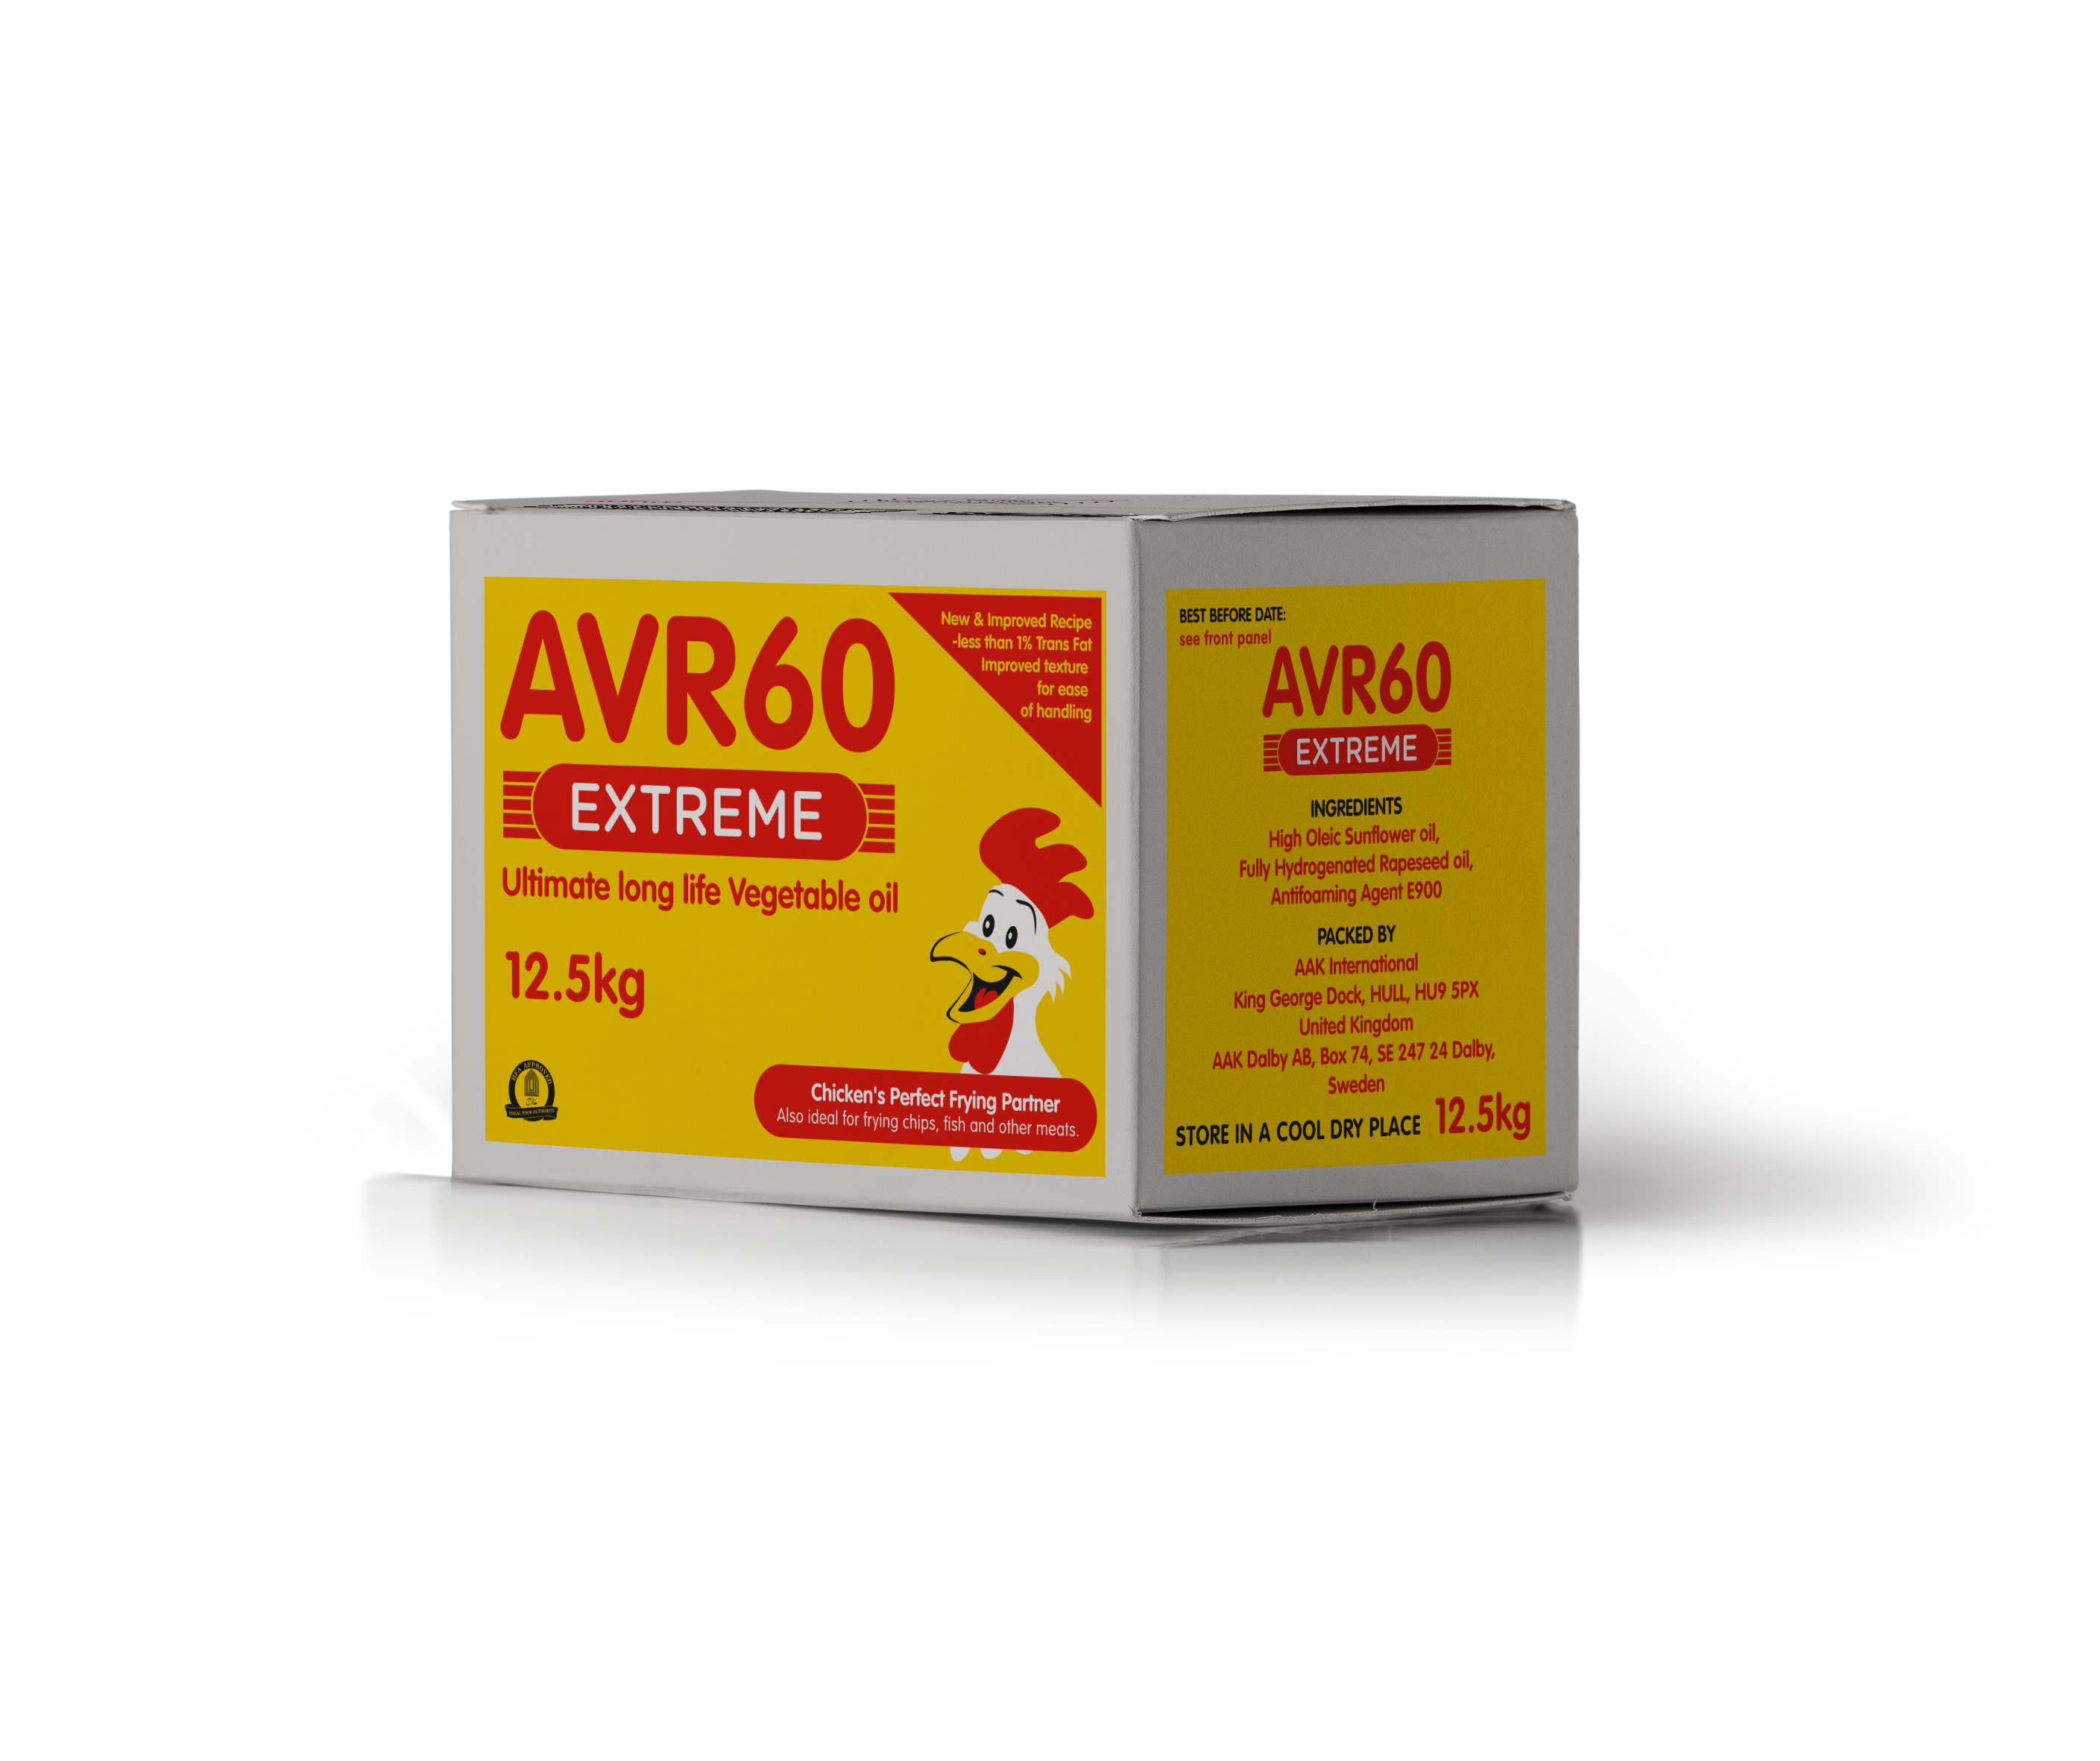 AVR60 Extreme 12 5kg Box mockup